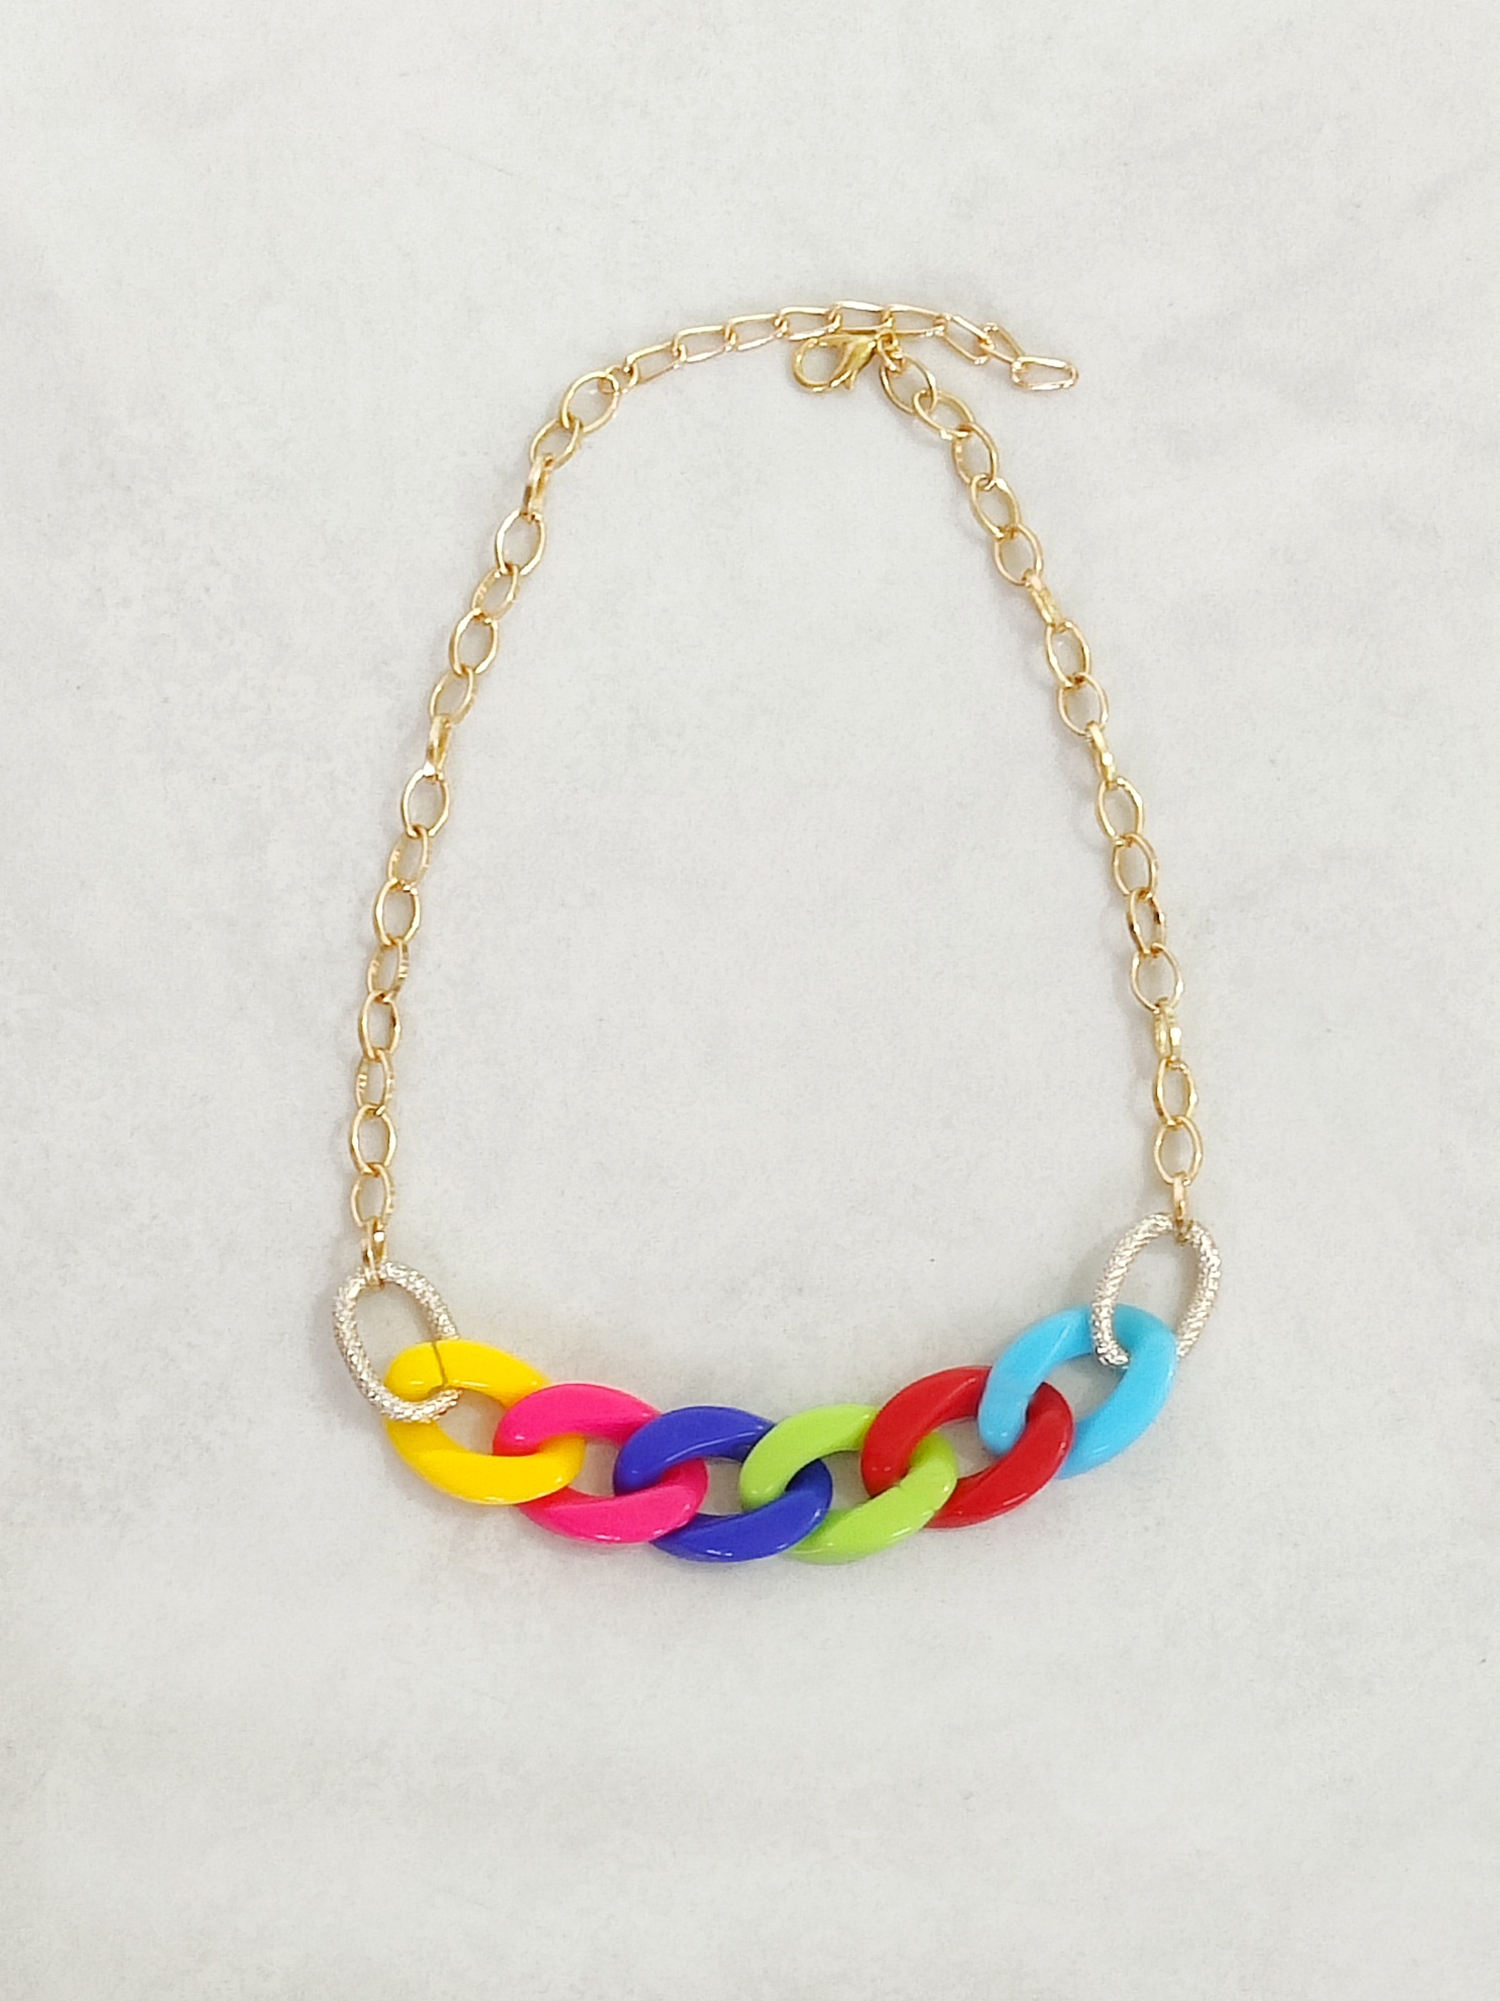 Rainbow Link Necklace - Multicolored